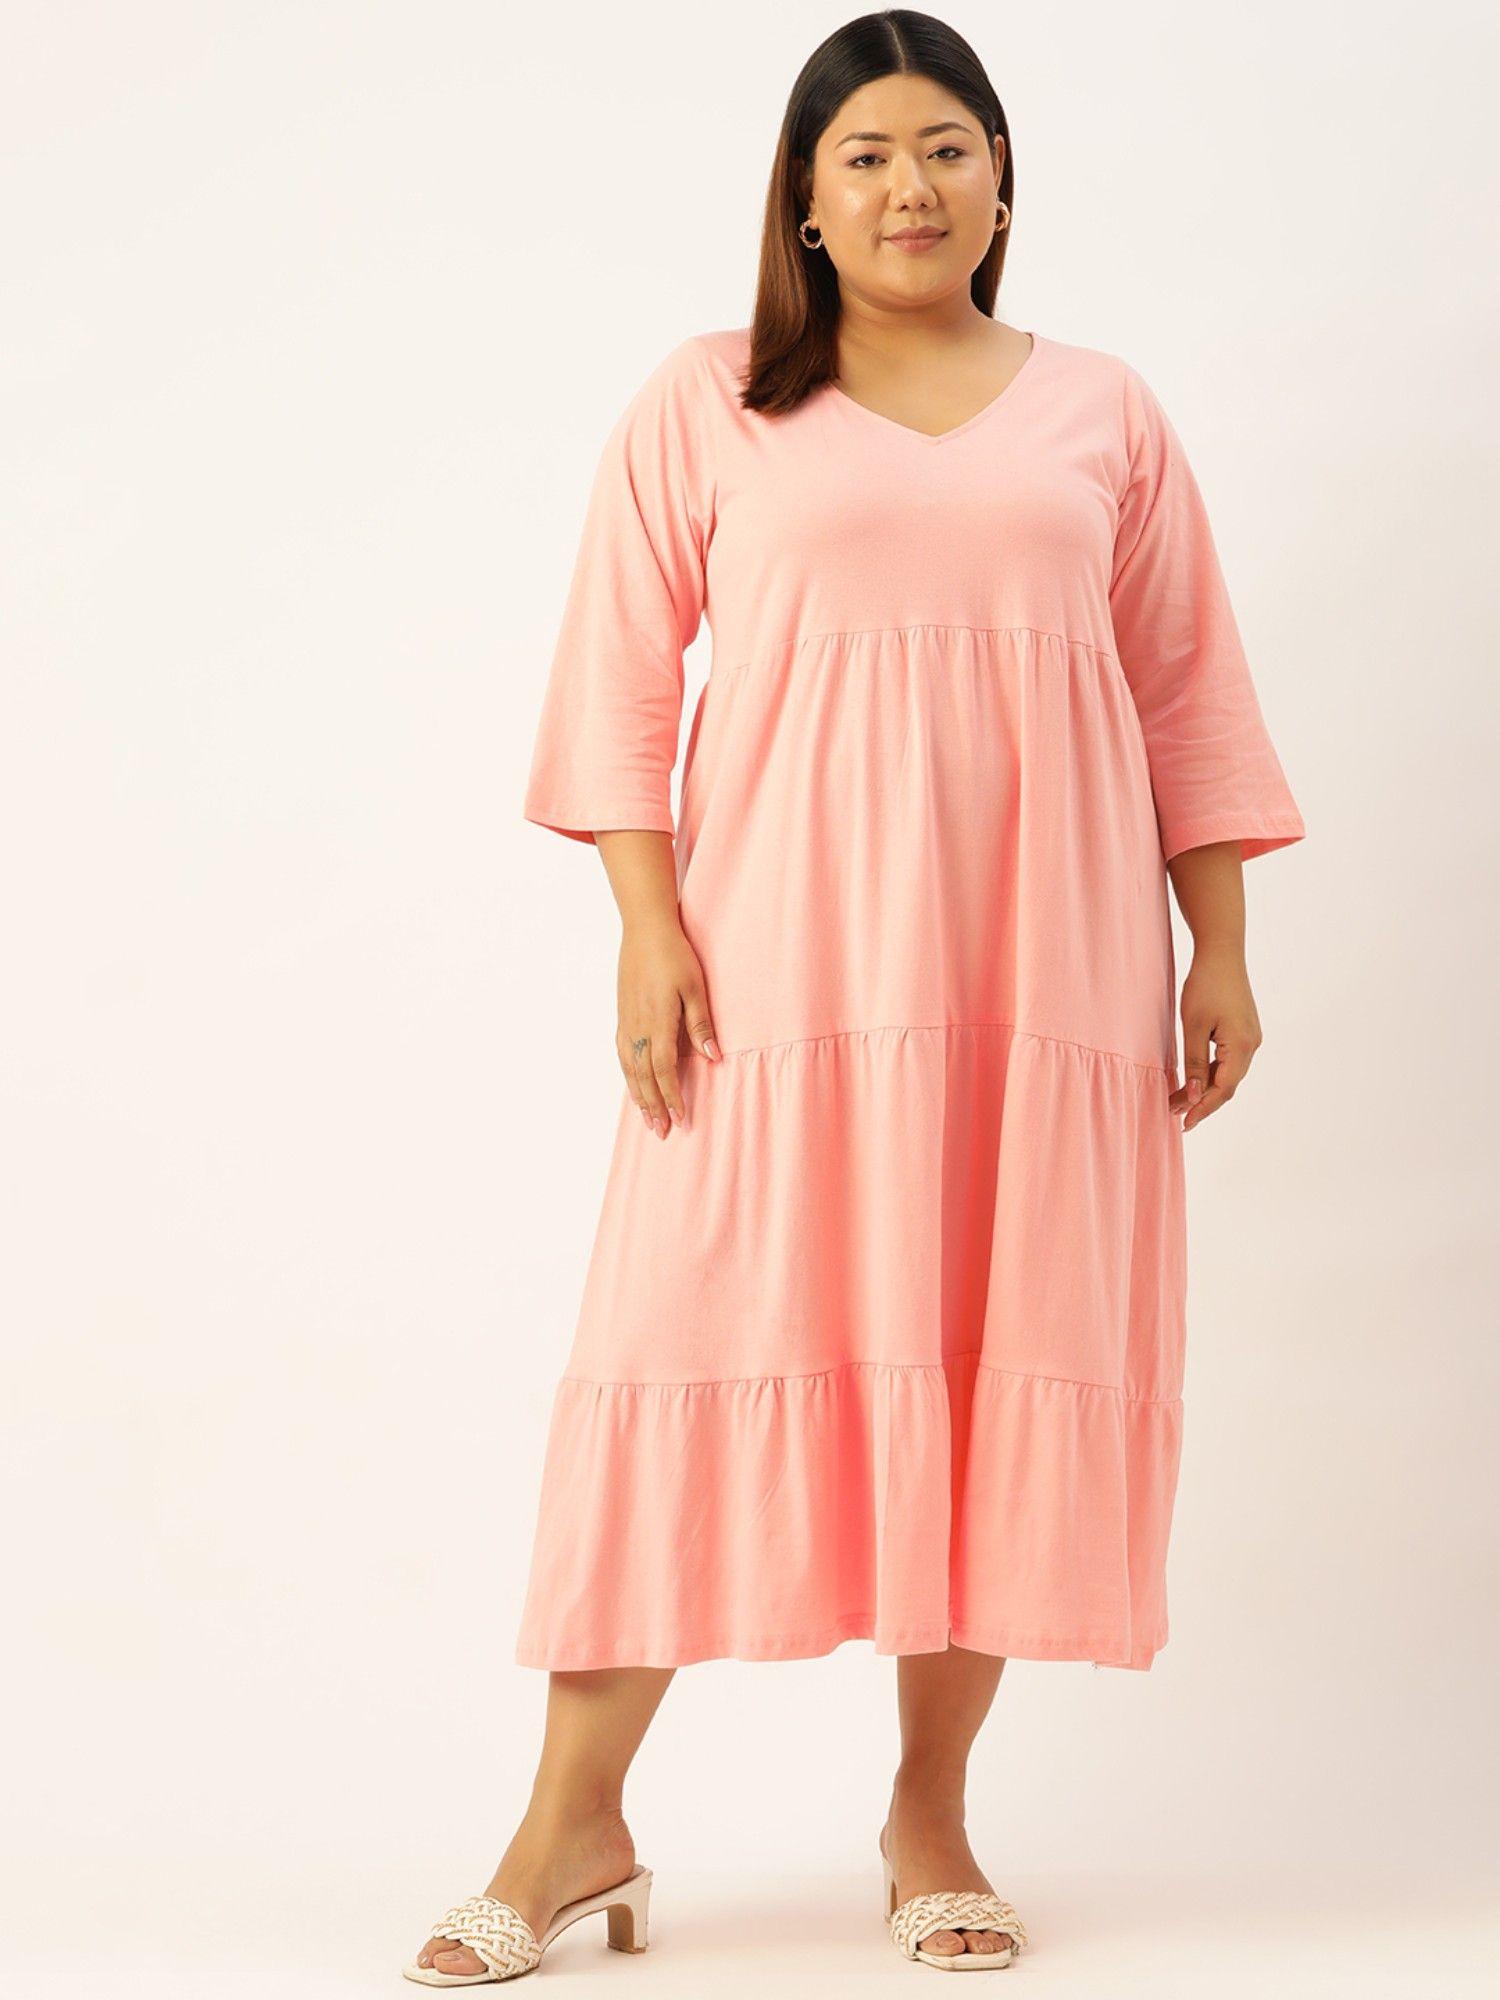 plus size women's dark peach solid color cotton tiered dress